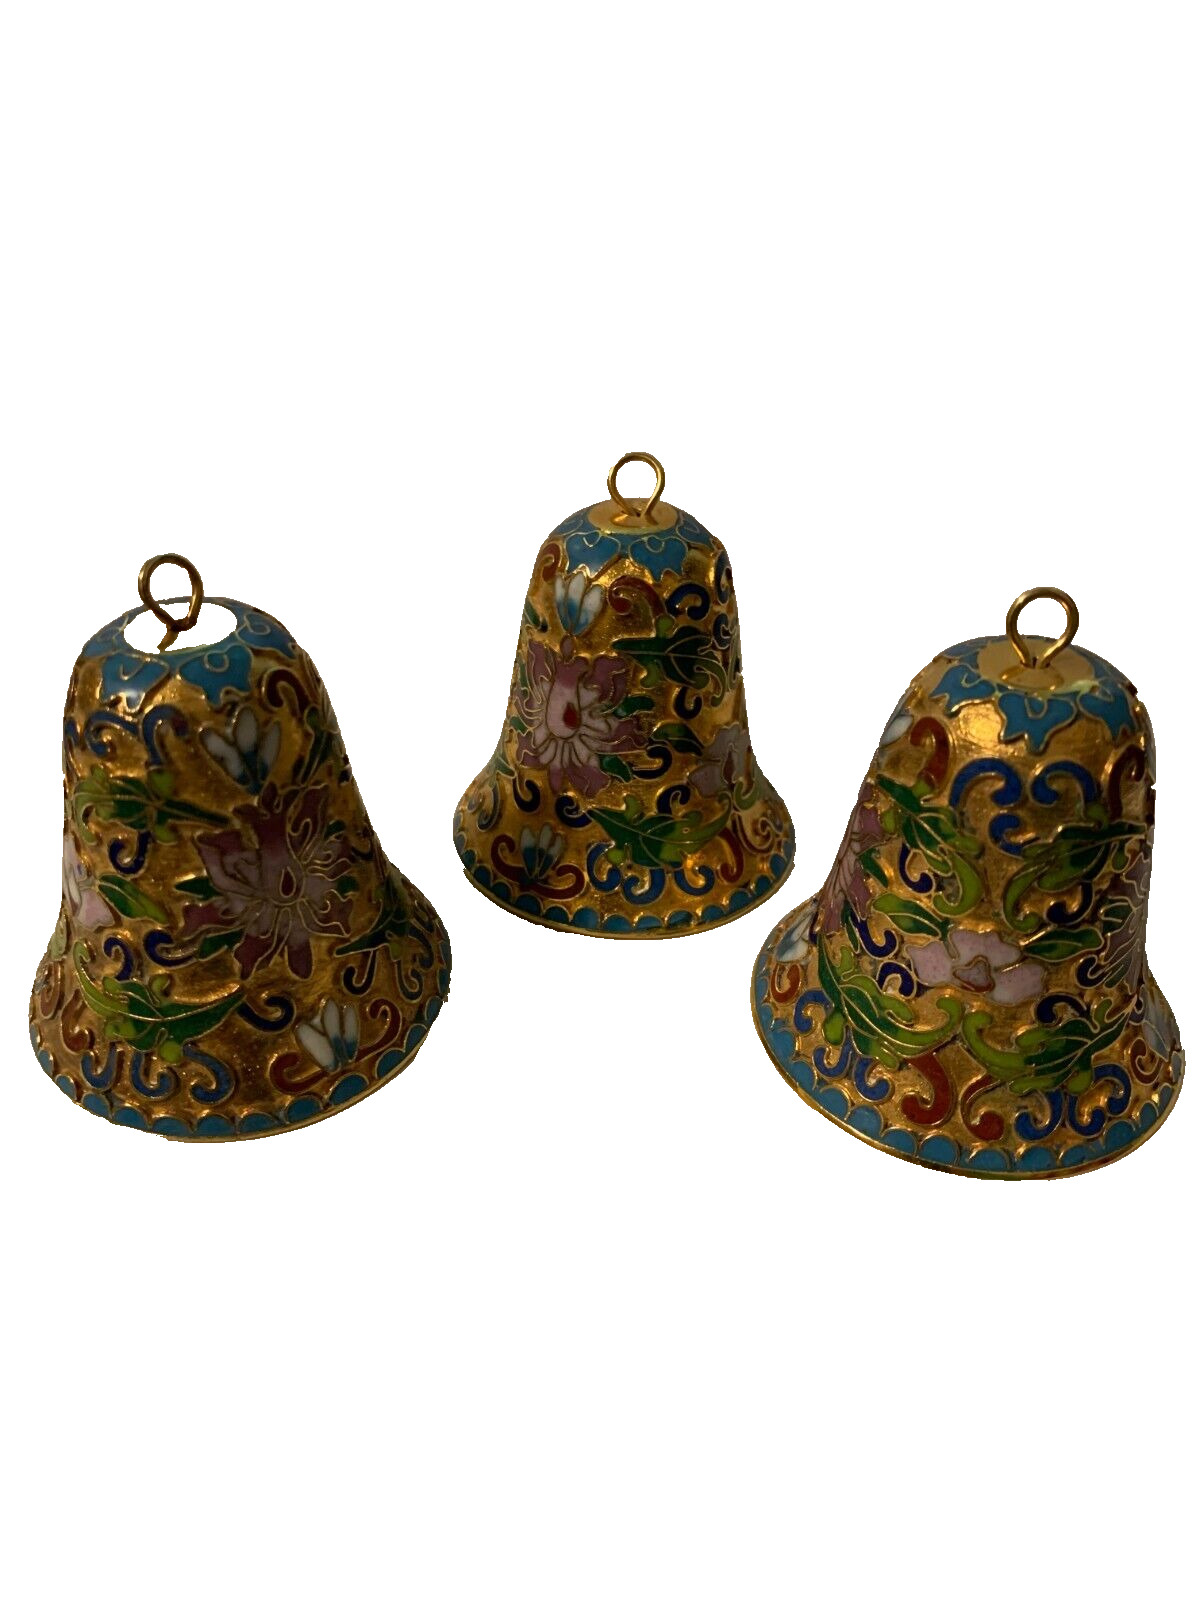 Vintage Lillian Vernon  cloisonne bells, set of 3